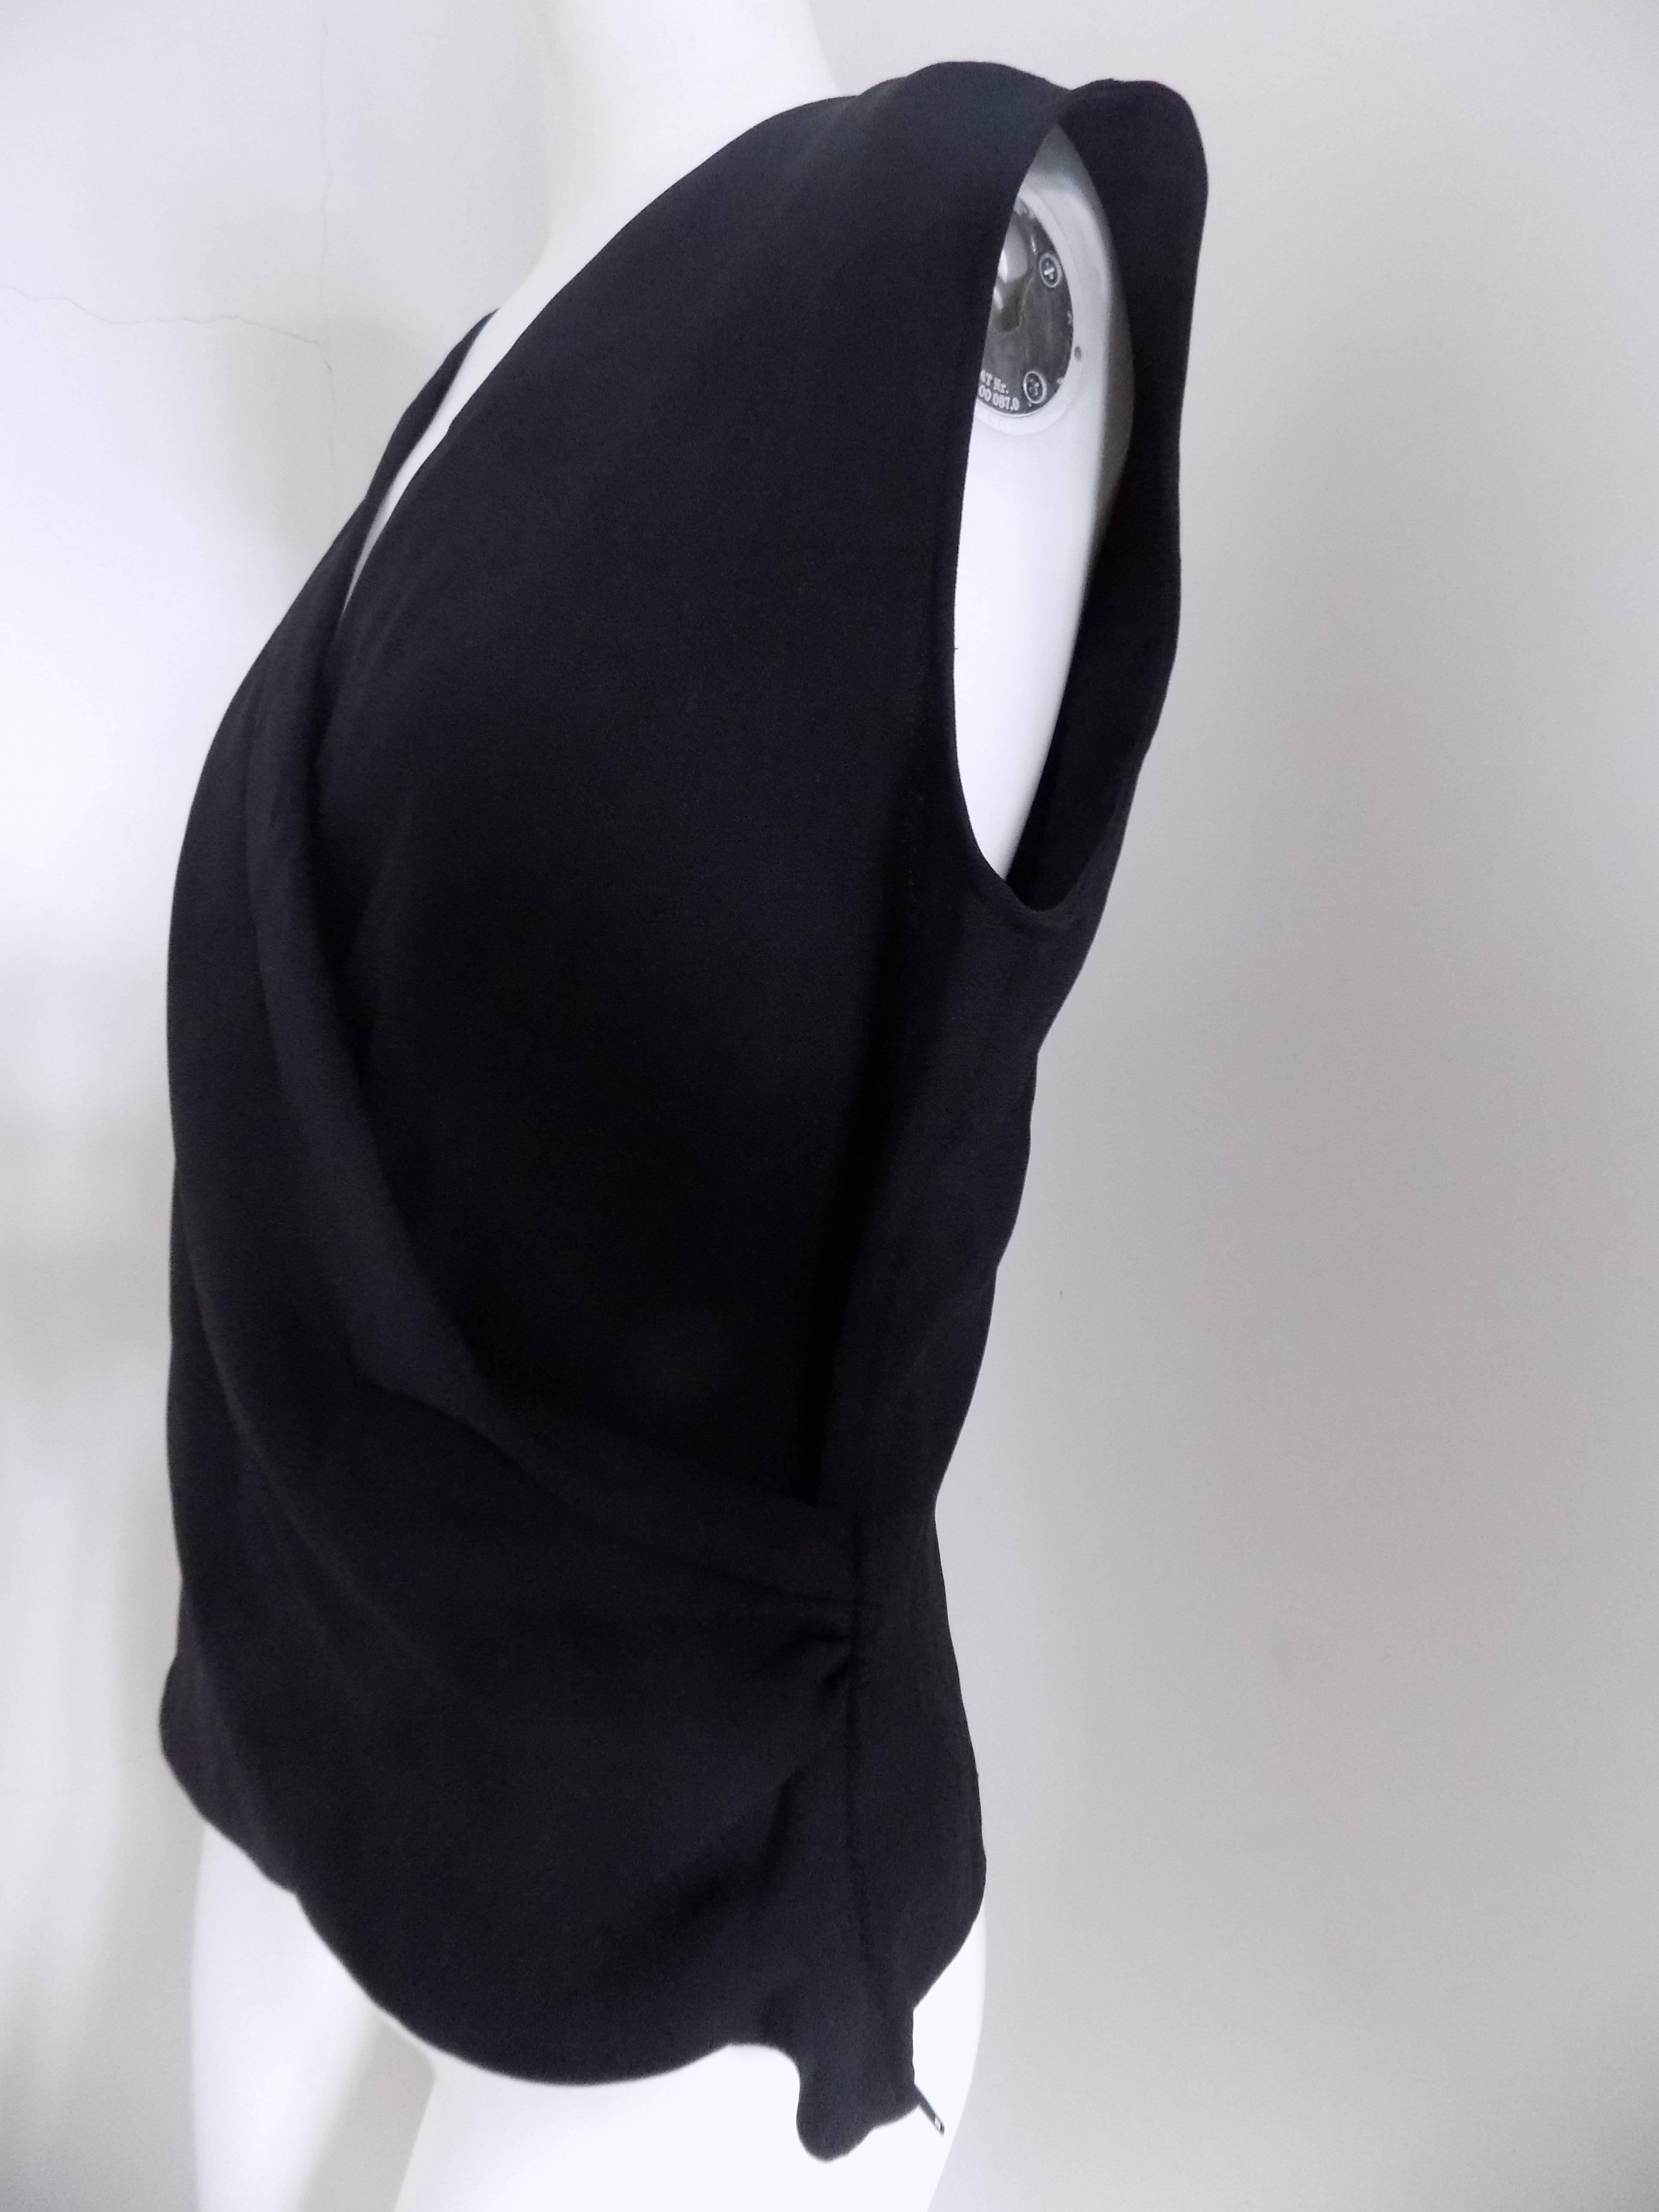 Yves Saint Laurent Variation black shirt 
totally made in italy in italian size range 44 